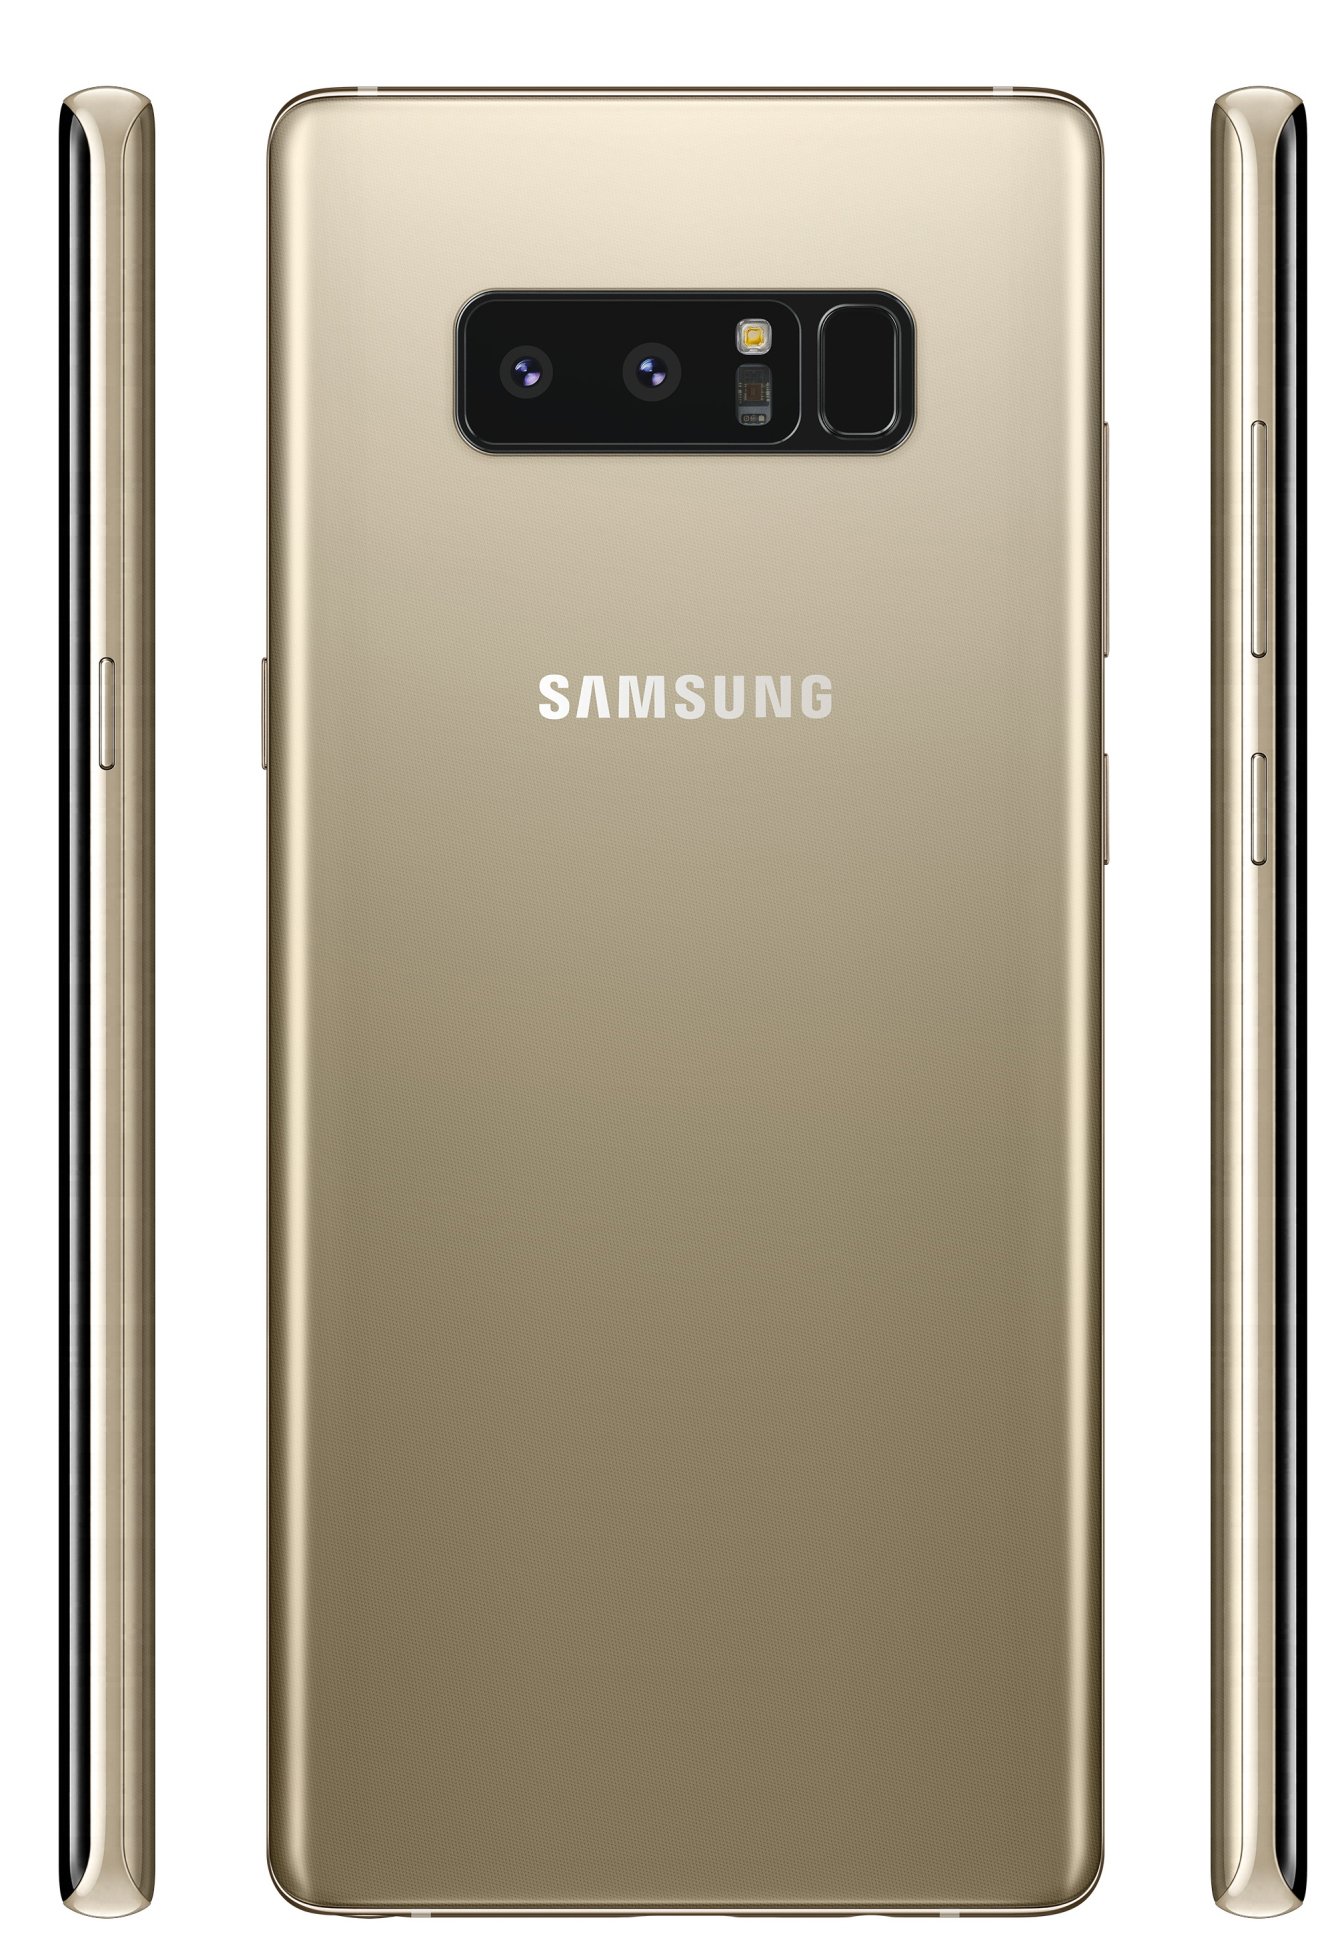 Пресс-фото Samsung Galaxy Note 8: меньше рамок, больше экрана (обновлено)-4